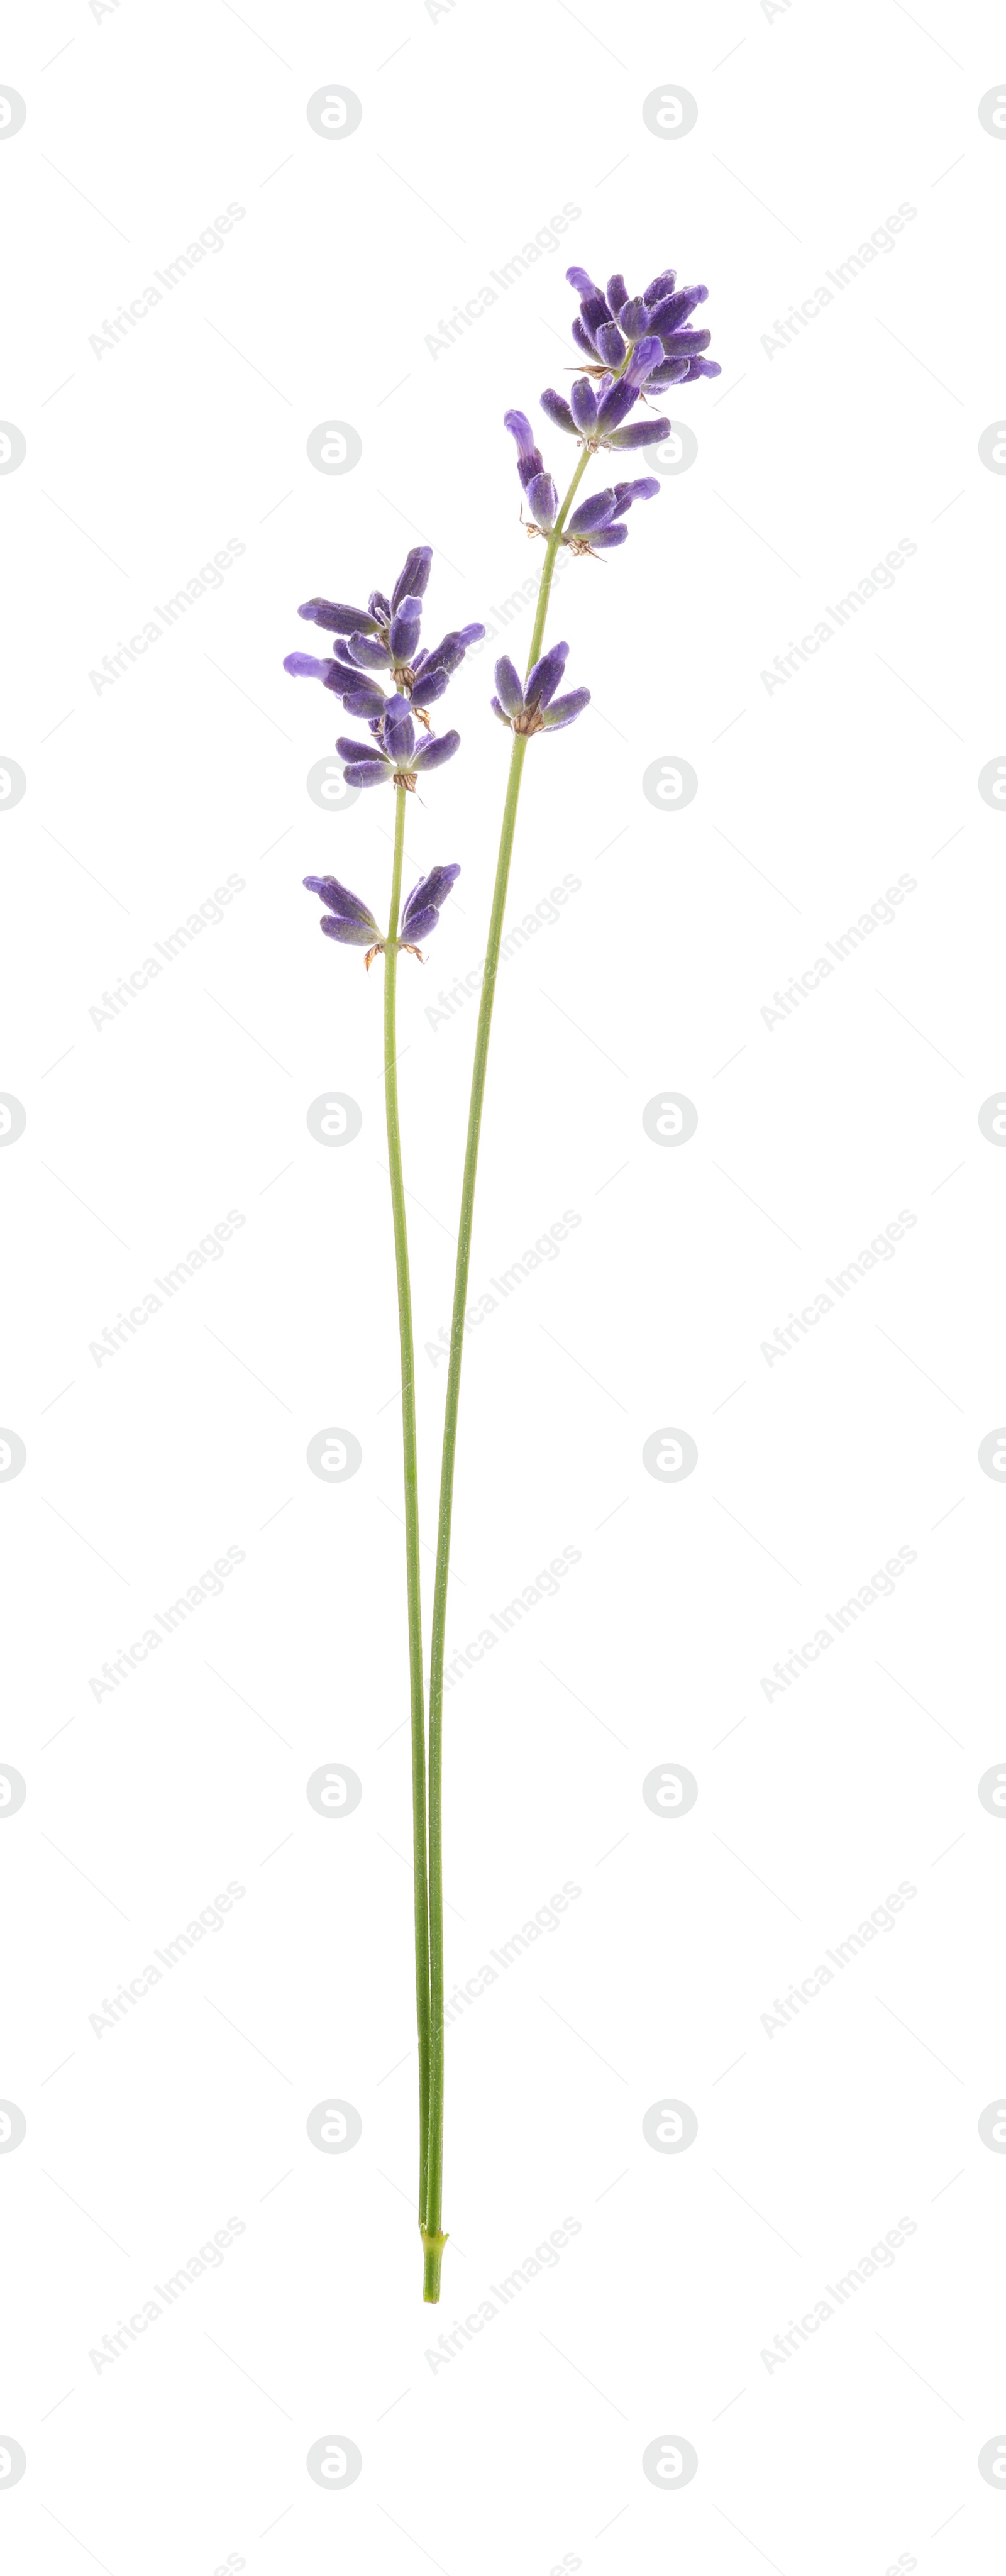 Photo of Beautiful fresh lavender flowers isolated on white